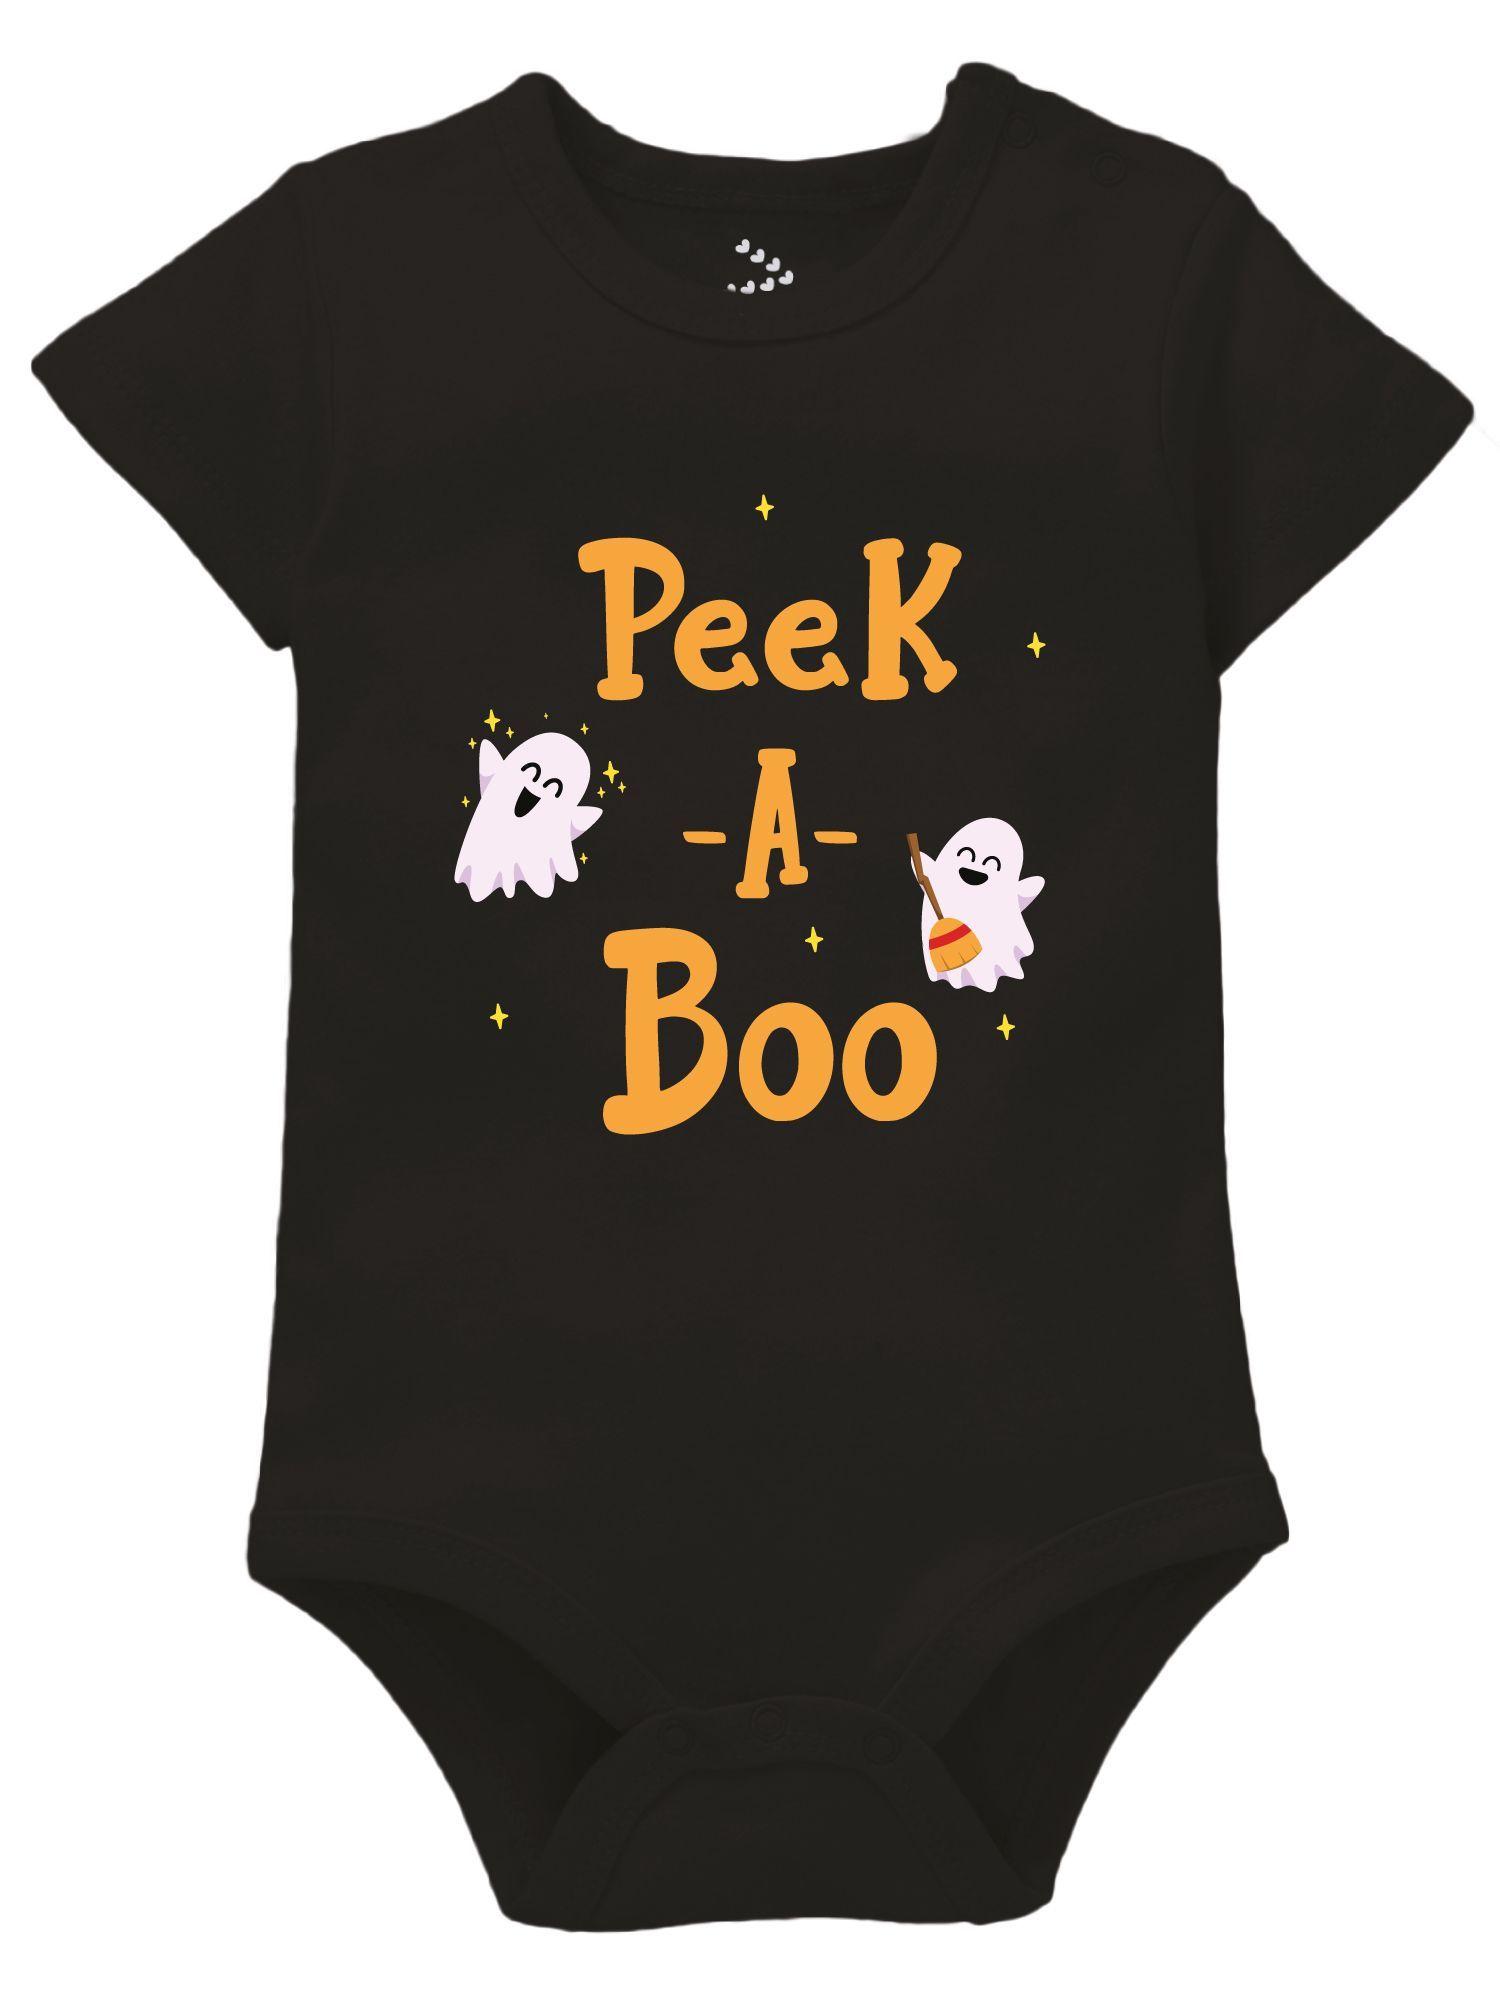 peek-a-boo-newborn-baby-romper-clothes-halloween-baby-theme